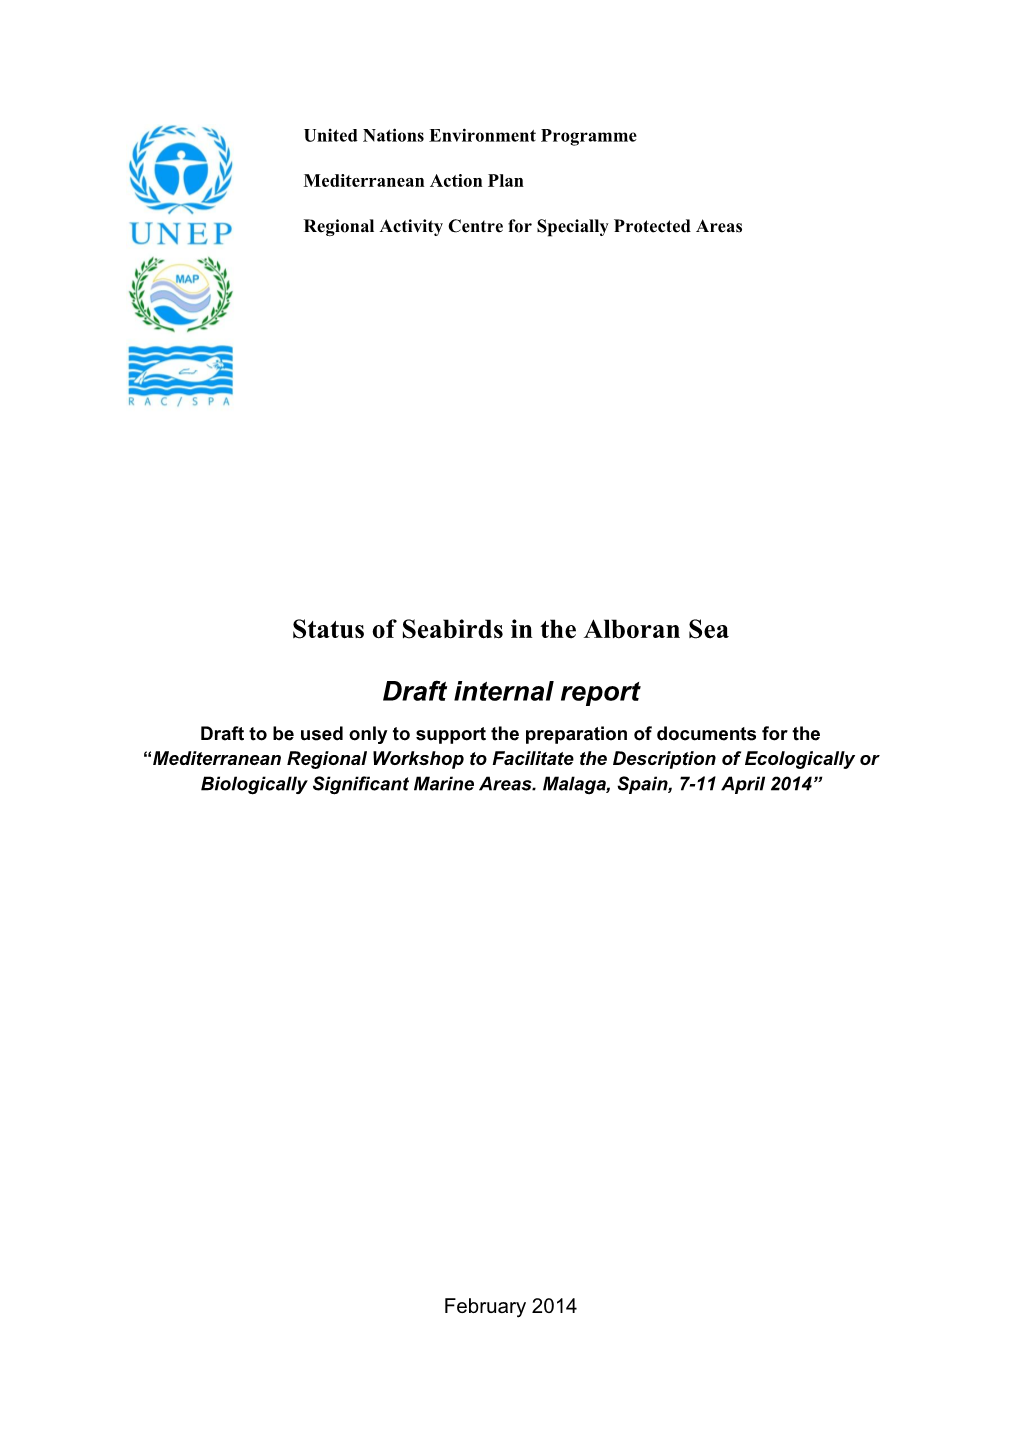 Status of Seabirds in the Alboran Sea Draft Internal Report